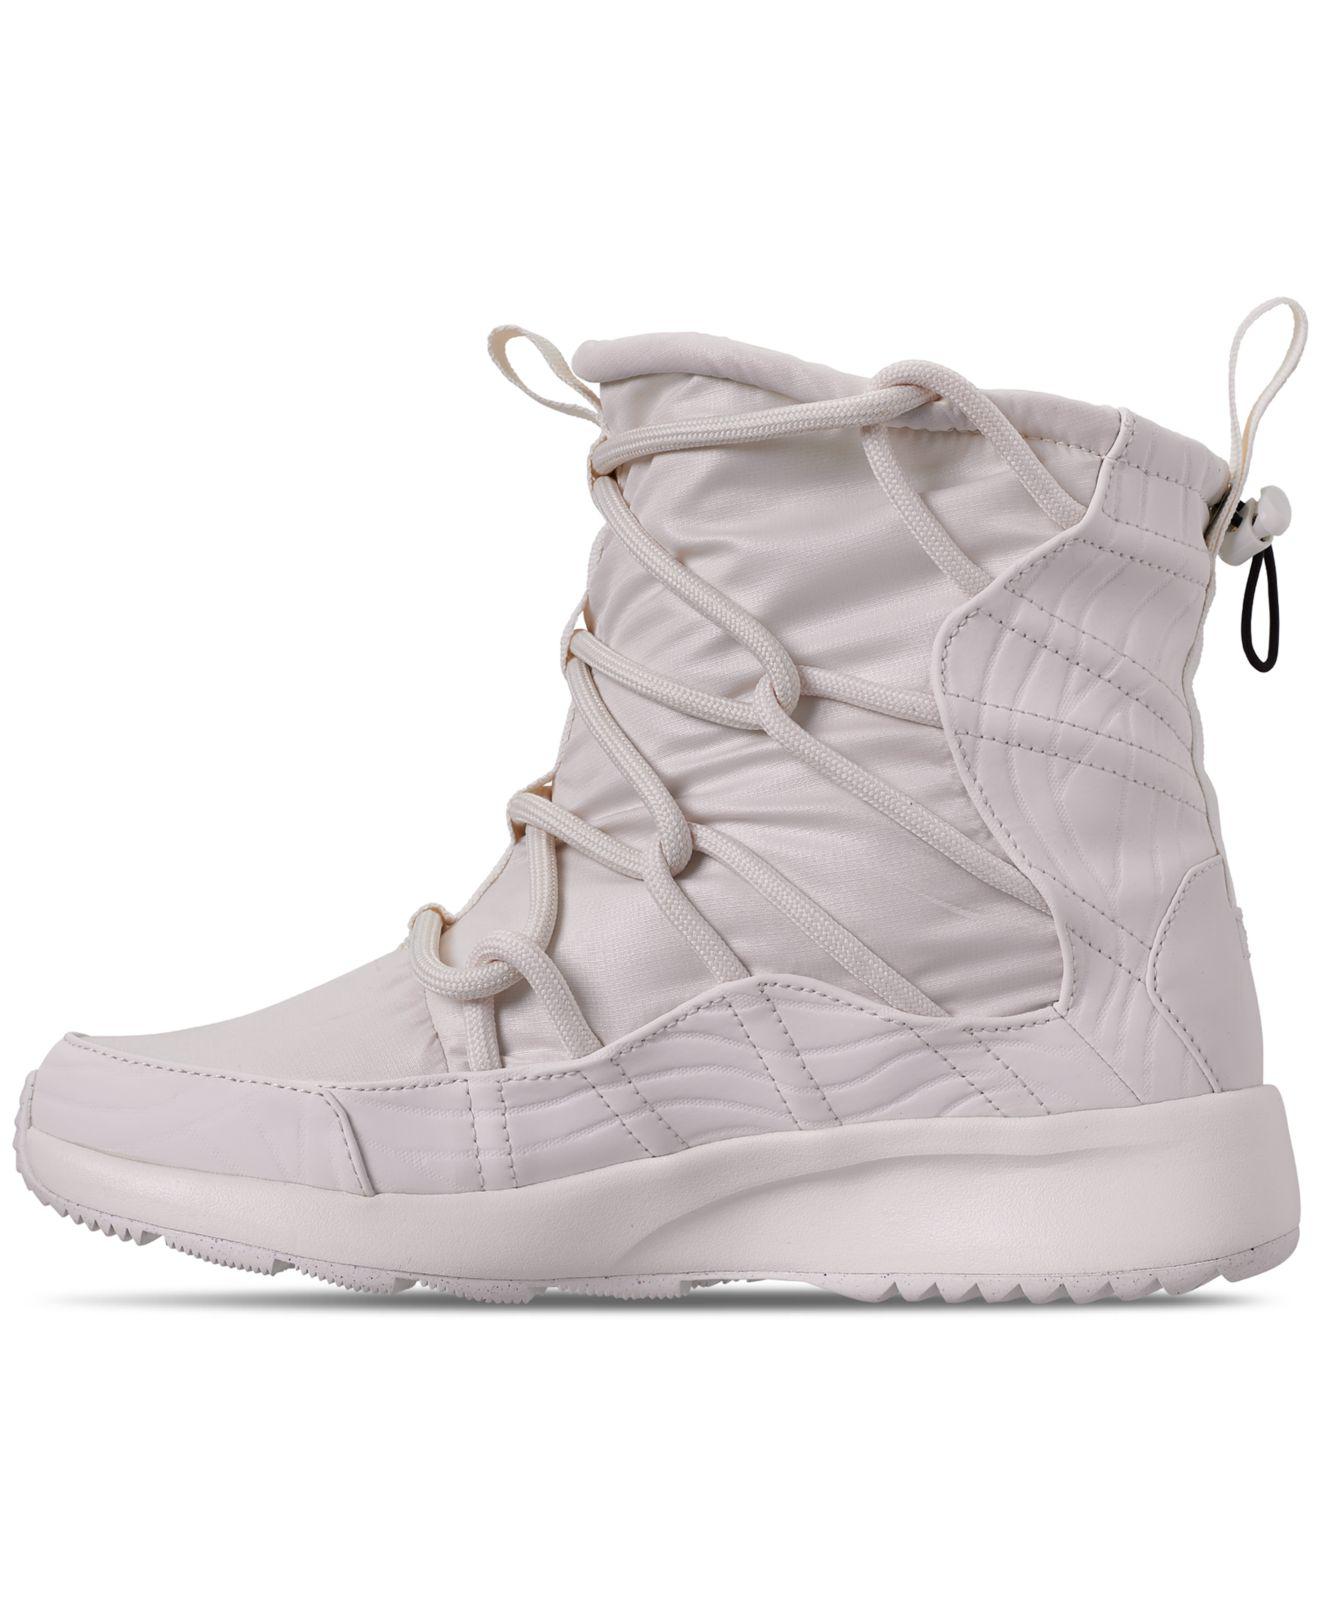 Nike Synthetic Tanjun High Rise Sneaker Boots in Black - Lyst